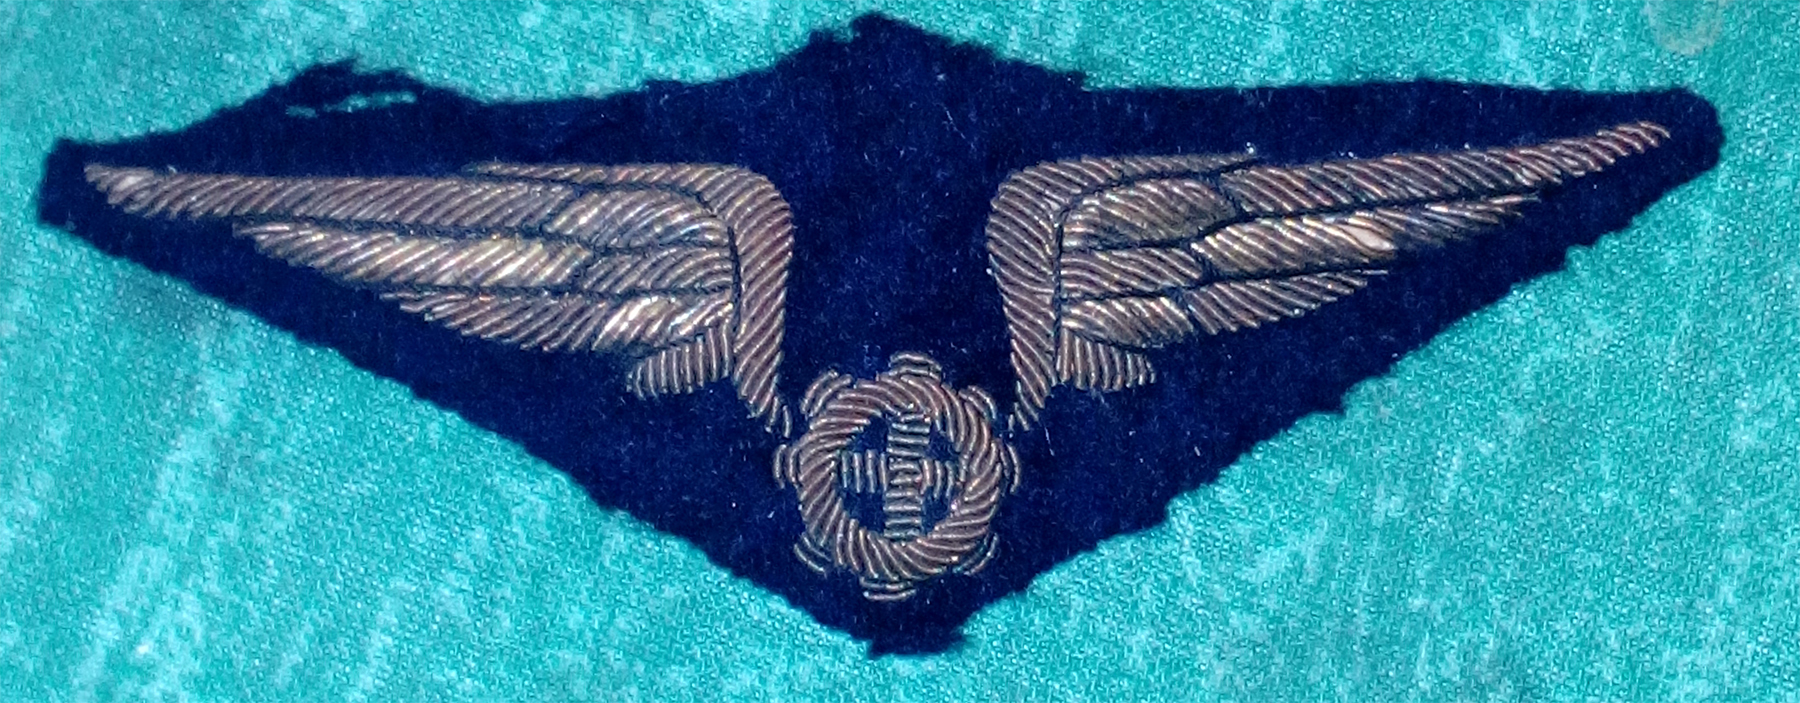 U.S. Pilot Badge, Senior Grade